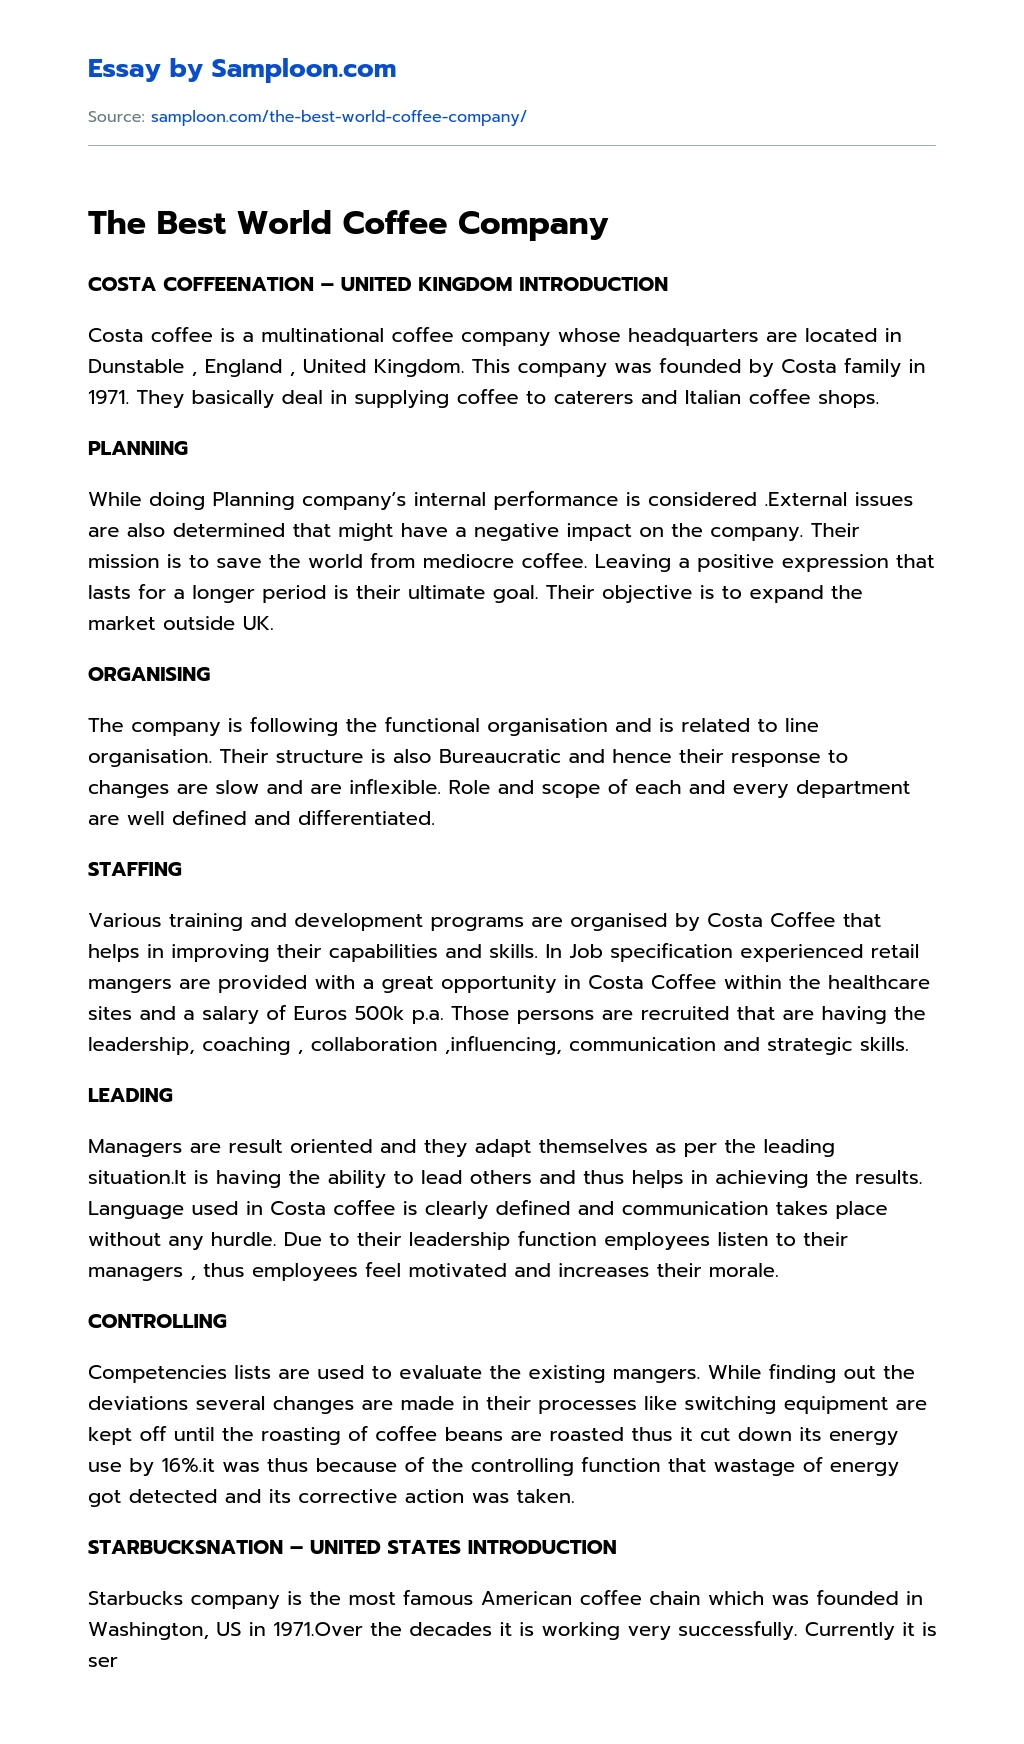 The Best World Coffee Company essay